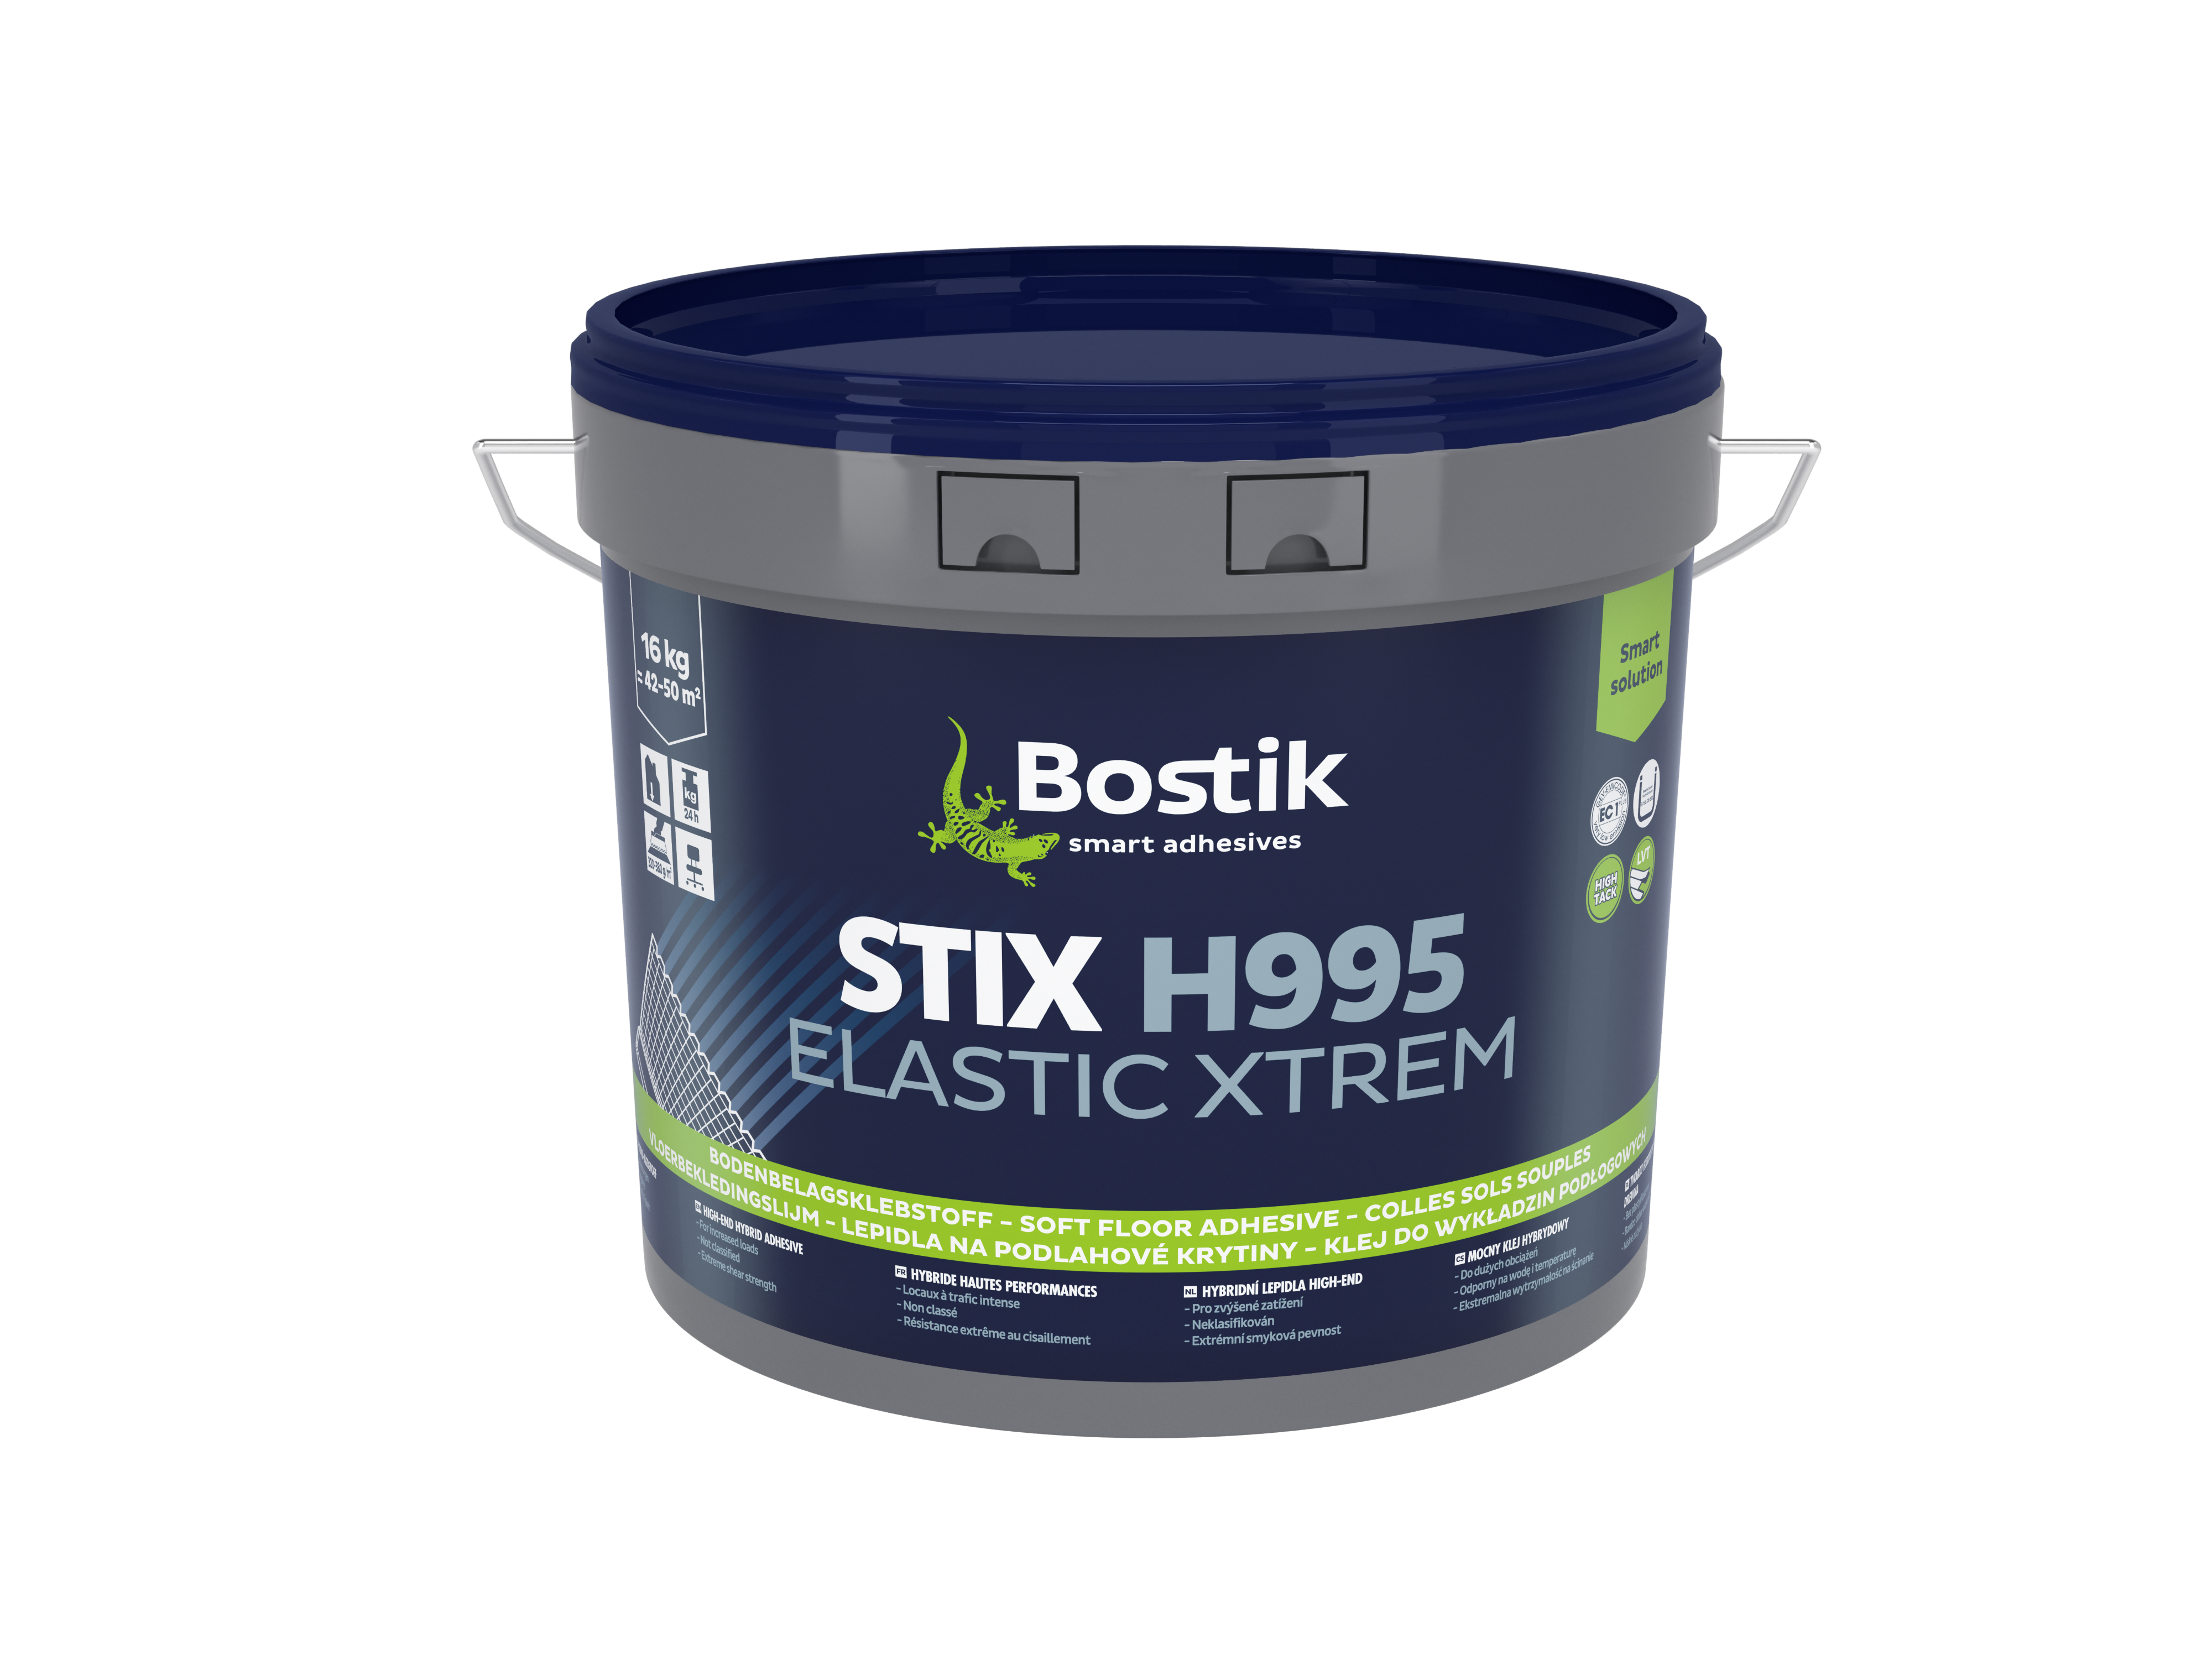 BOSTIK-STIX-H995-ELASTIC-XTREM.png